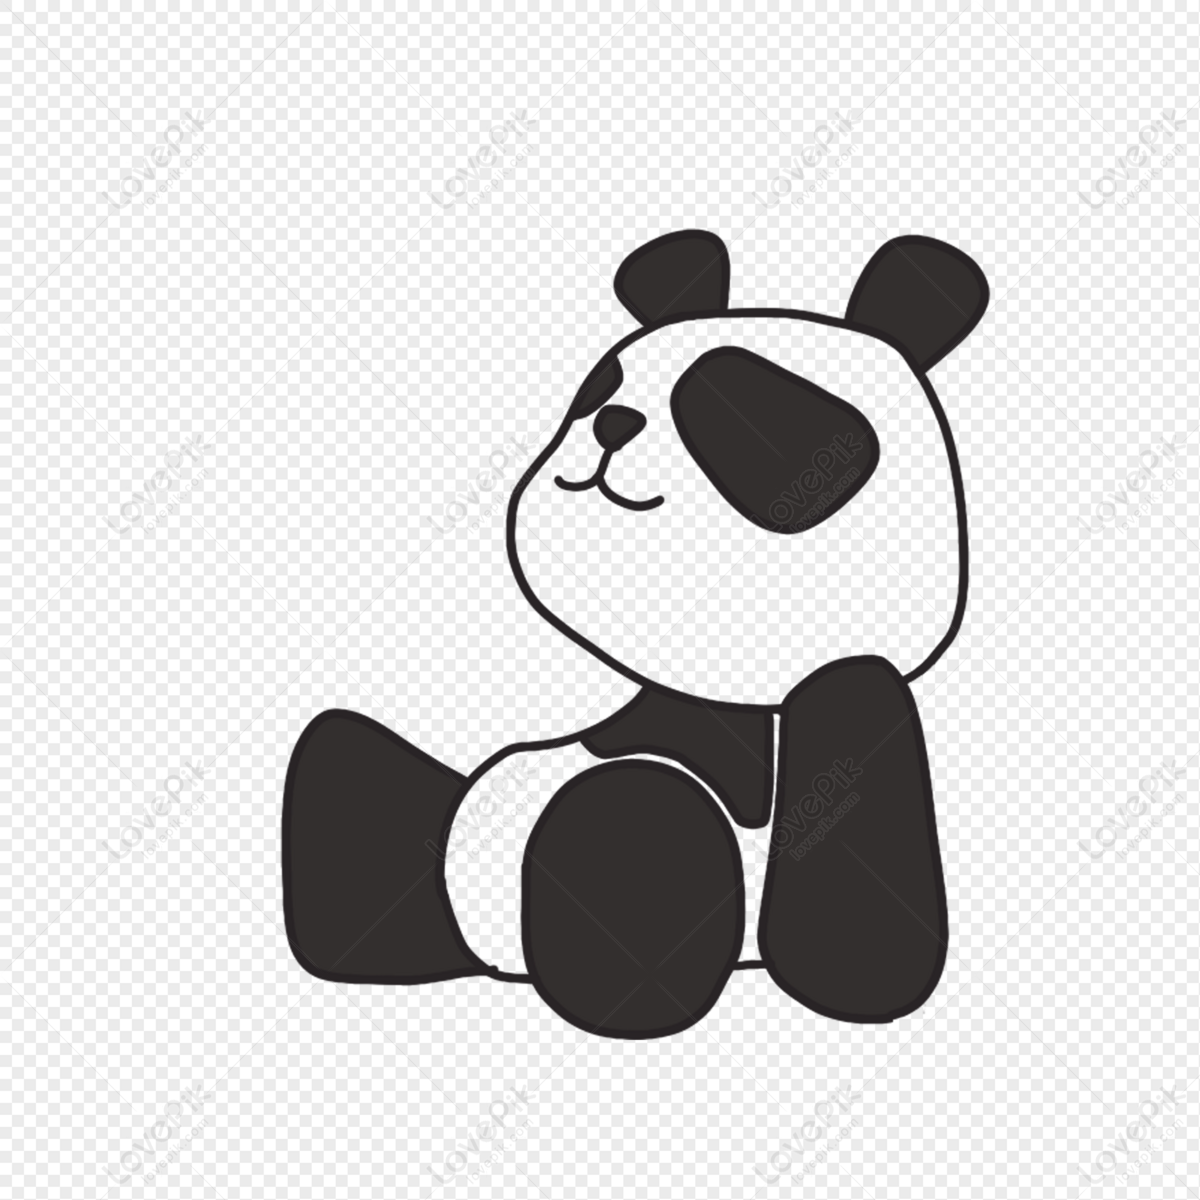 Imagem De Pessoa Triste - Panda Black And White Drawing - Free Transparent  PNG Clipart Images Download